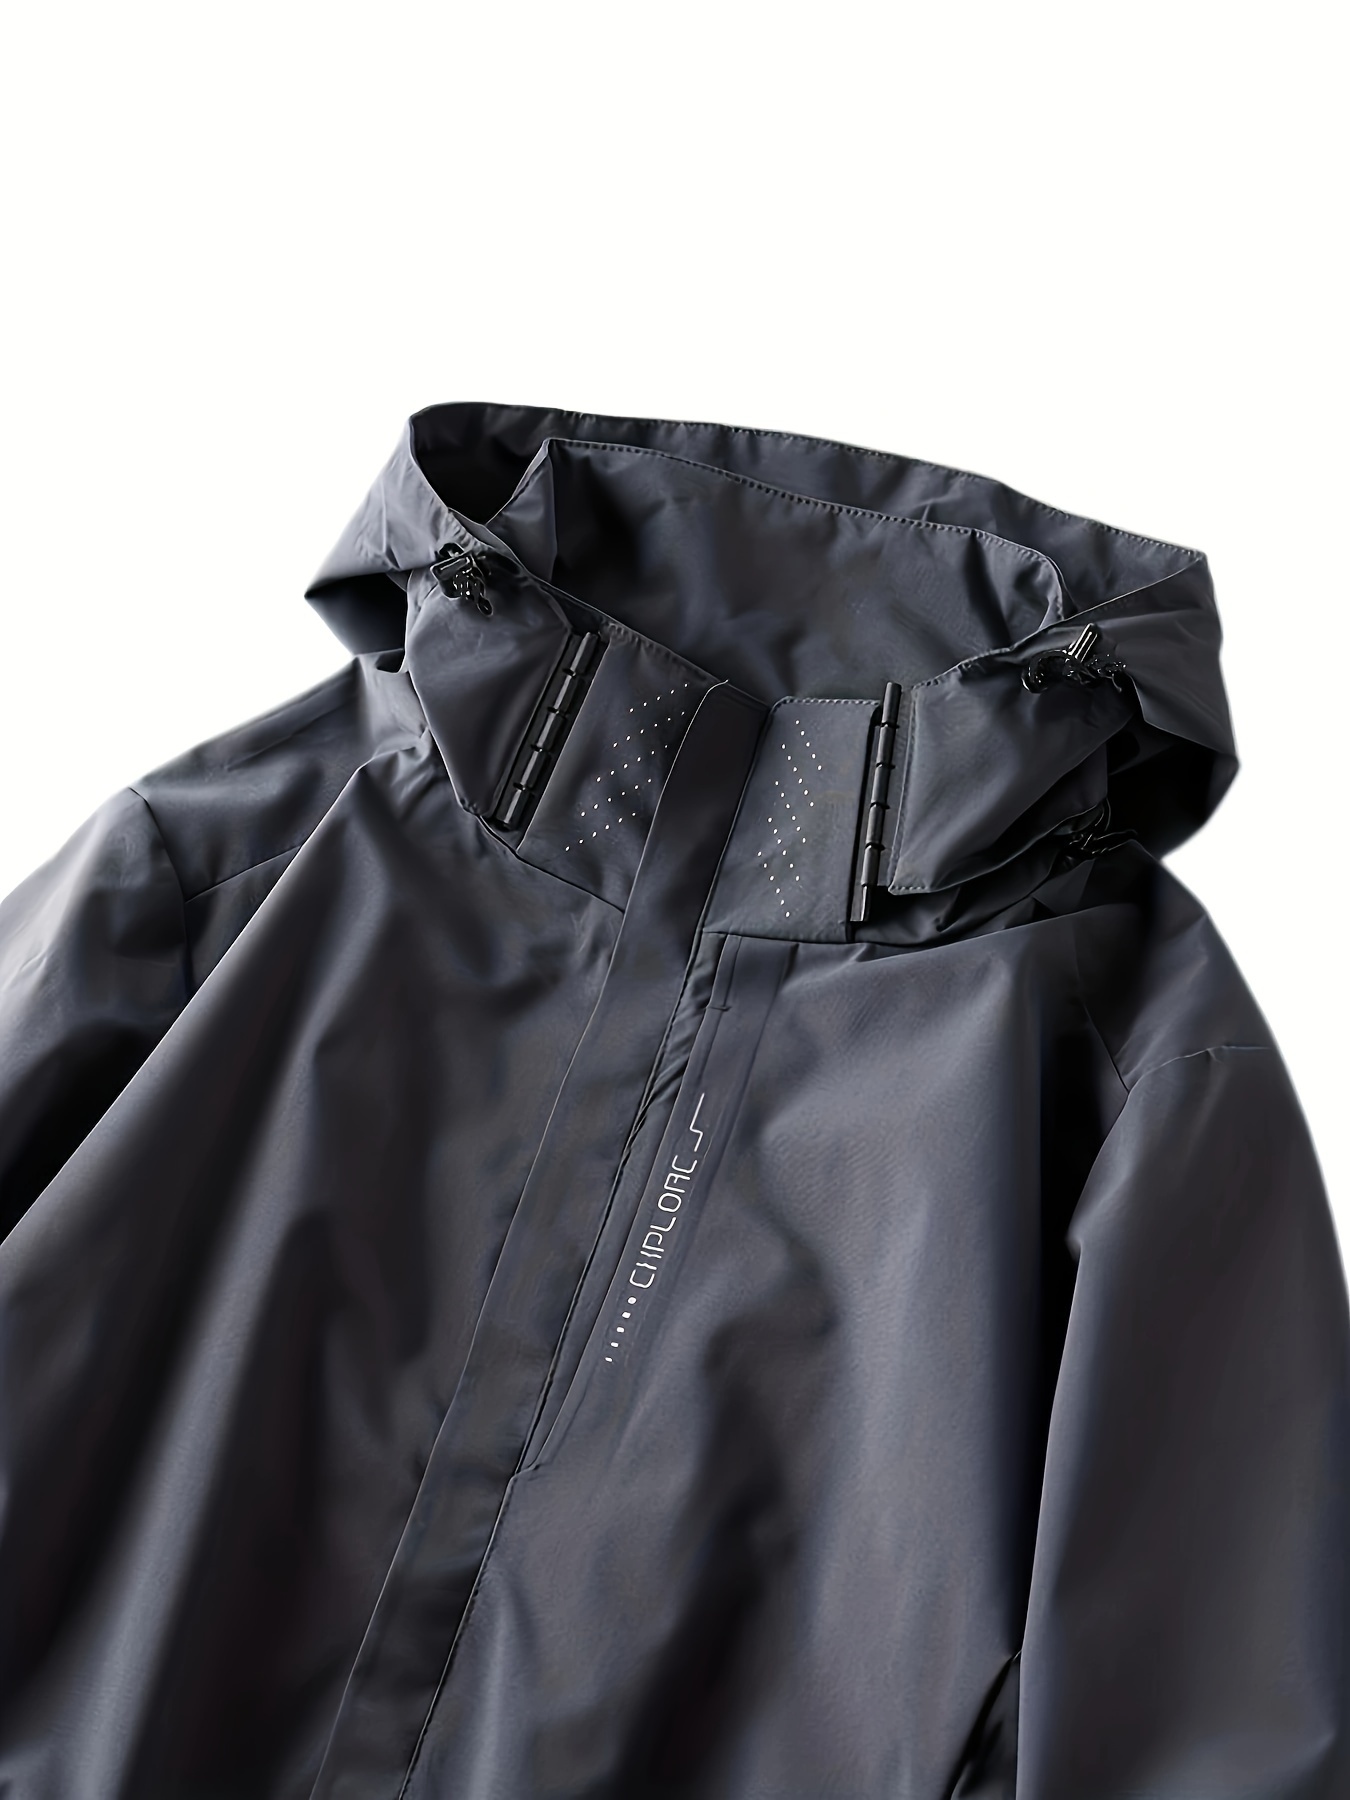 Waterproof Rain Jacket Mens Waterproof Rainwear (Jacket and Rain Pants Set)  Fishing Rainsuit Windproof Hooded Raincoat for Outdoors Running Walking  -L/XL/XXL/3XL/4XL/5XL (Color : Navy, Size : 5XL) : : Fashion